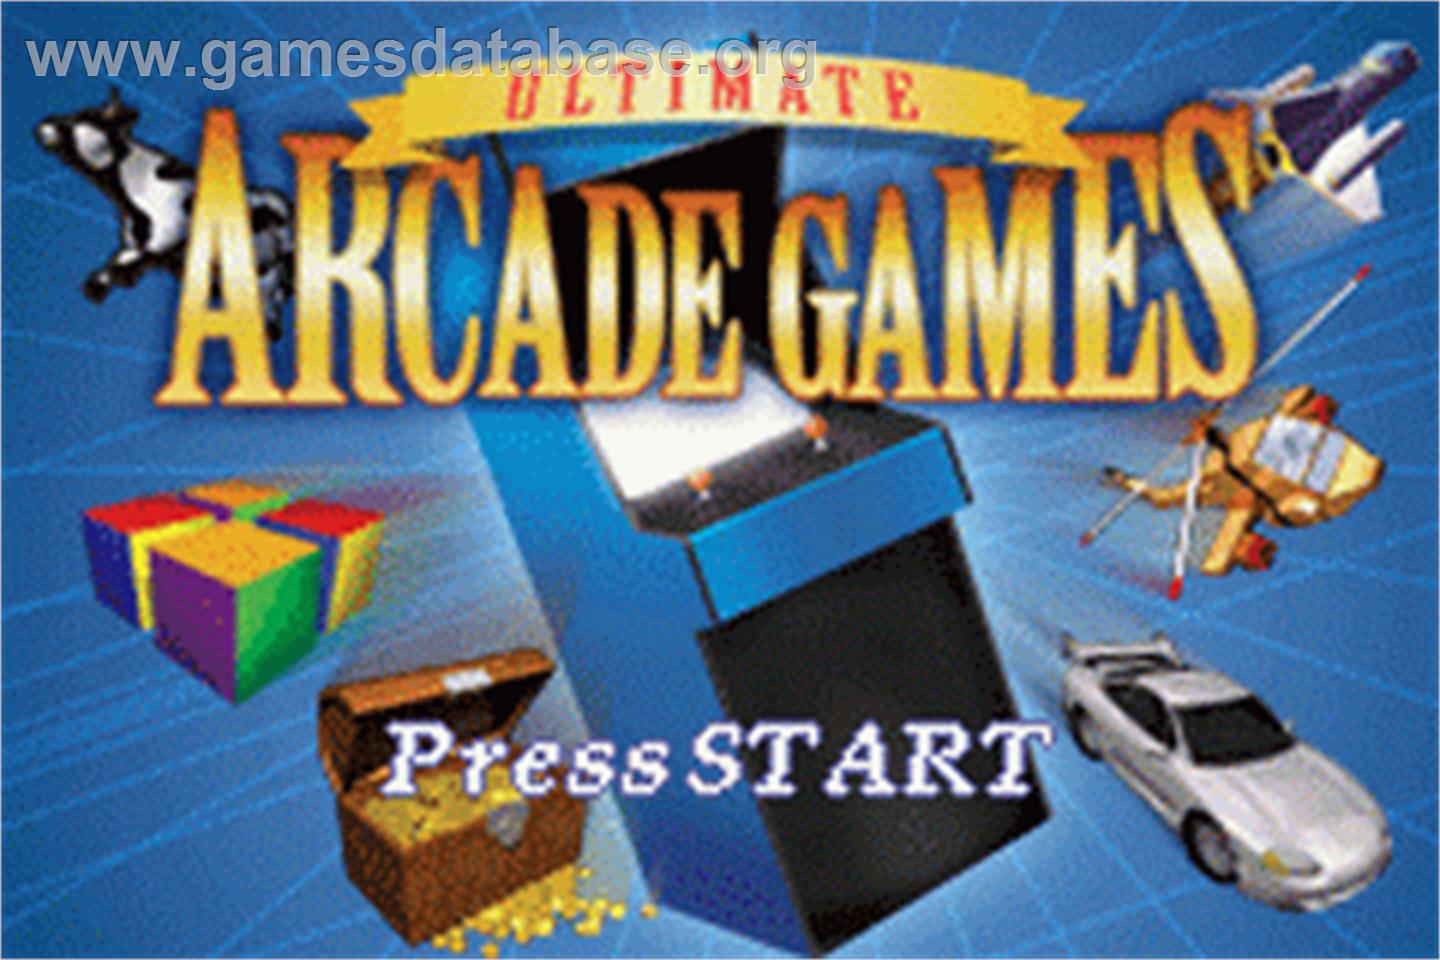 Ultimate Arcade Games - Nintendo Game Boy Advance - Artwork - Title Screen